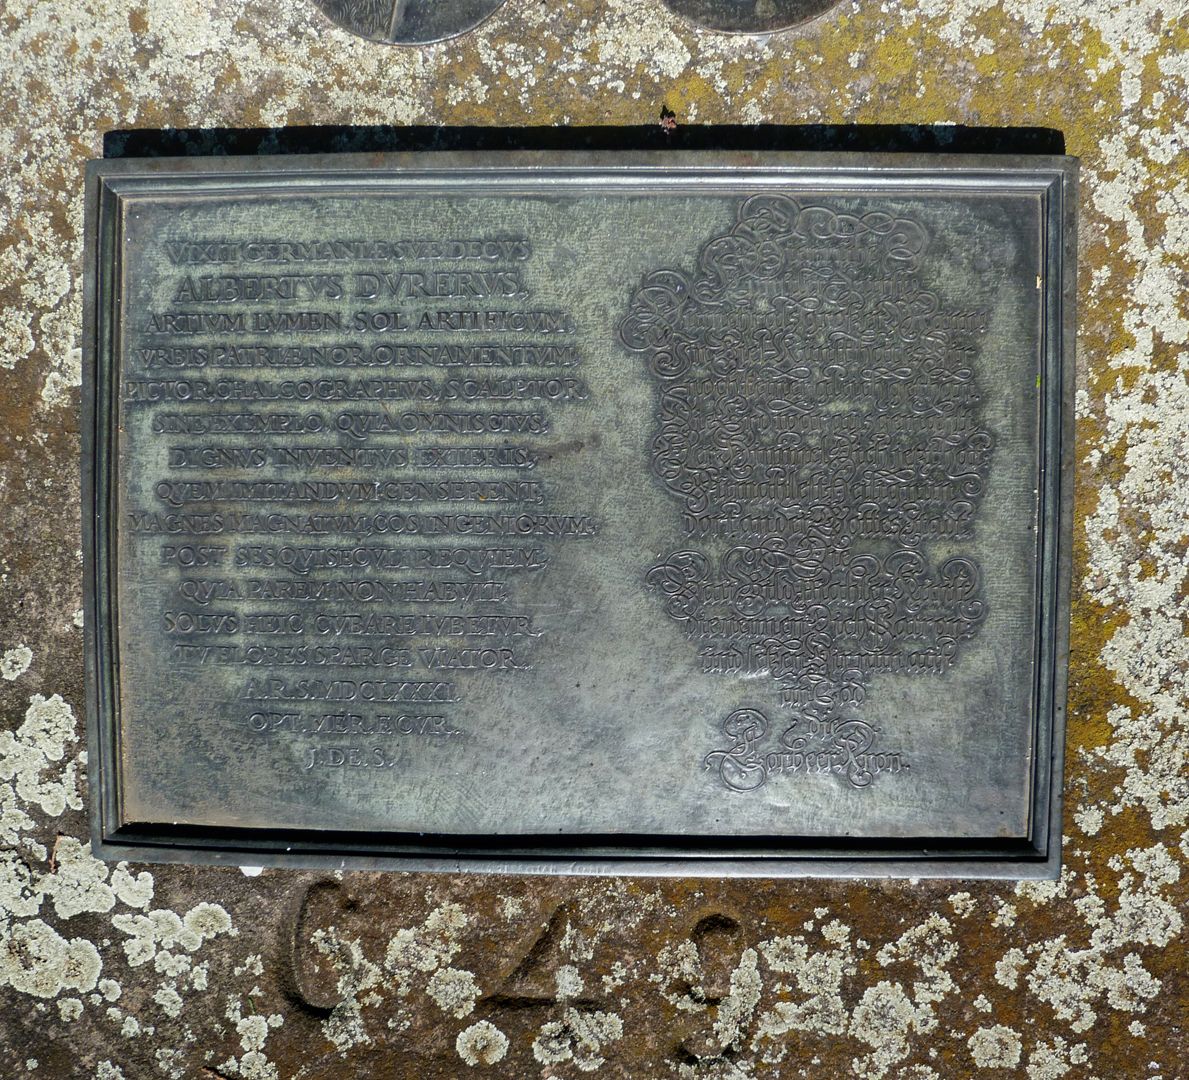 Albrecht Dürer's gravesite Grave inscription from the year 1681 by Joachim von Sandrart